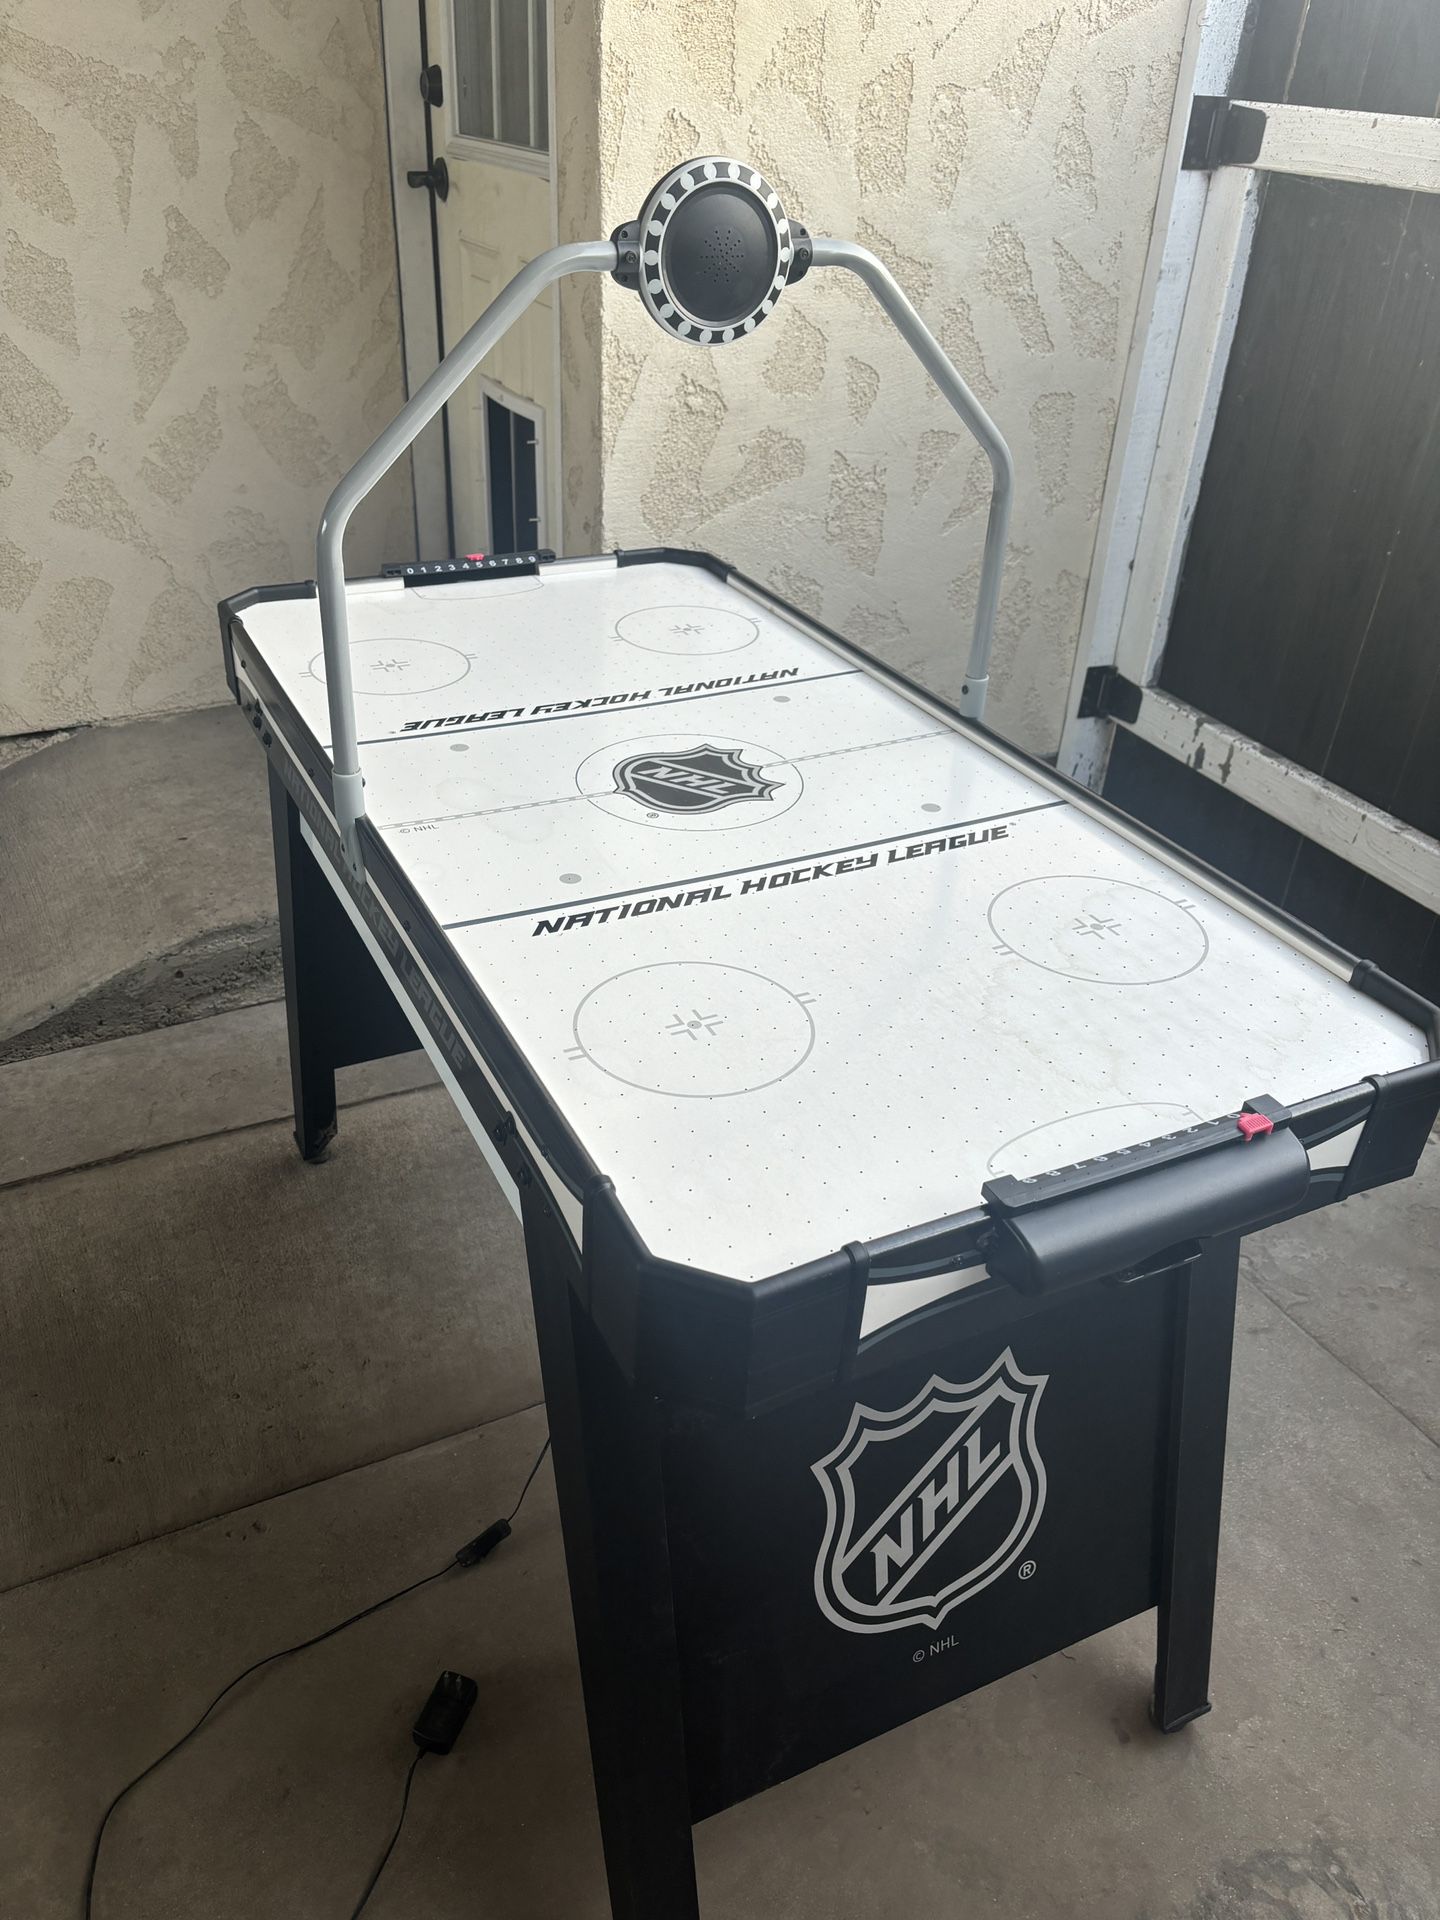 NHL Air Hockey Table